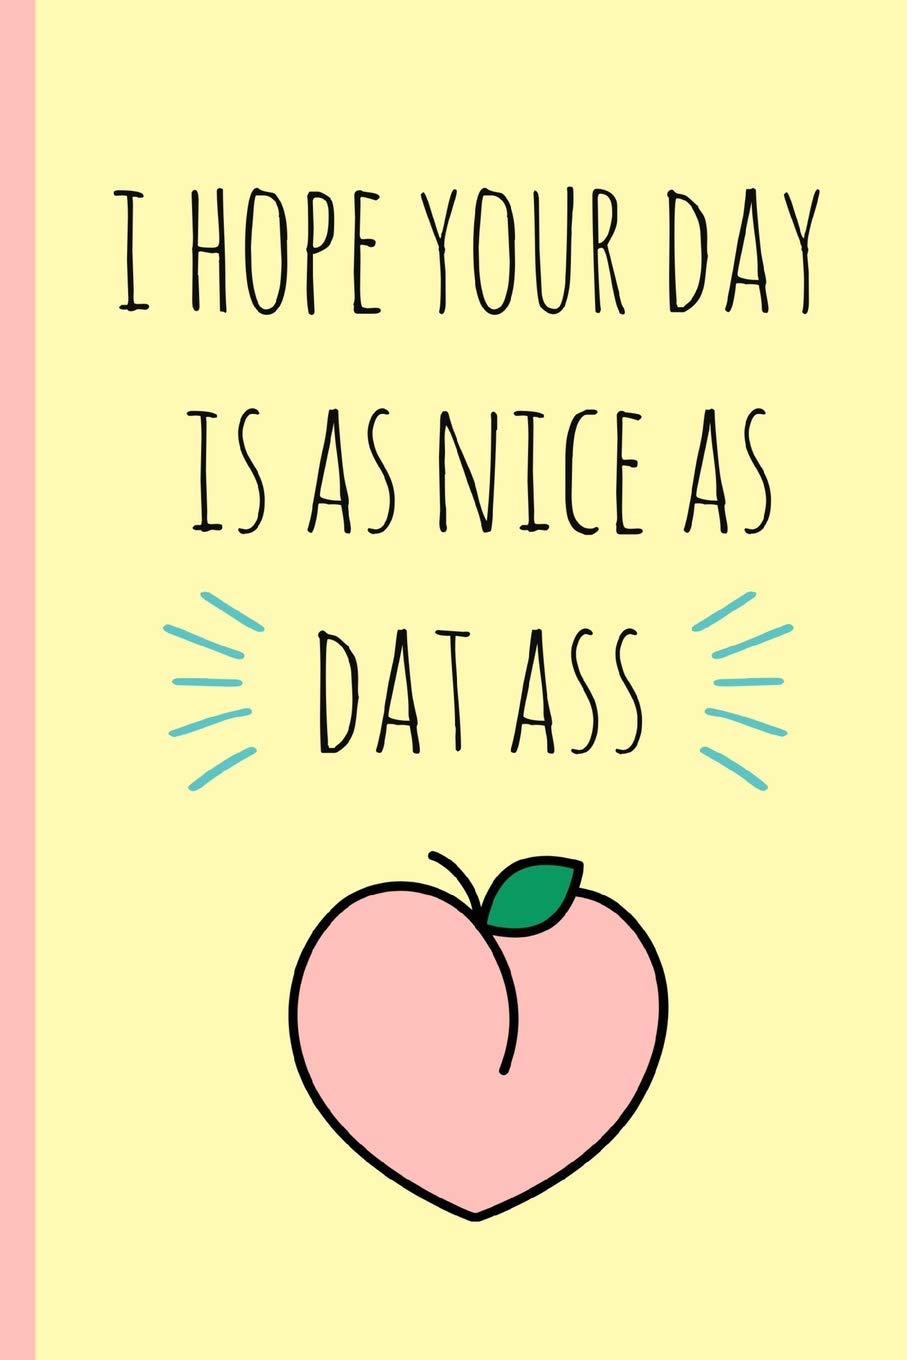 apple ass nice